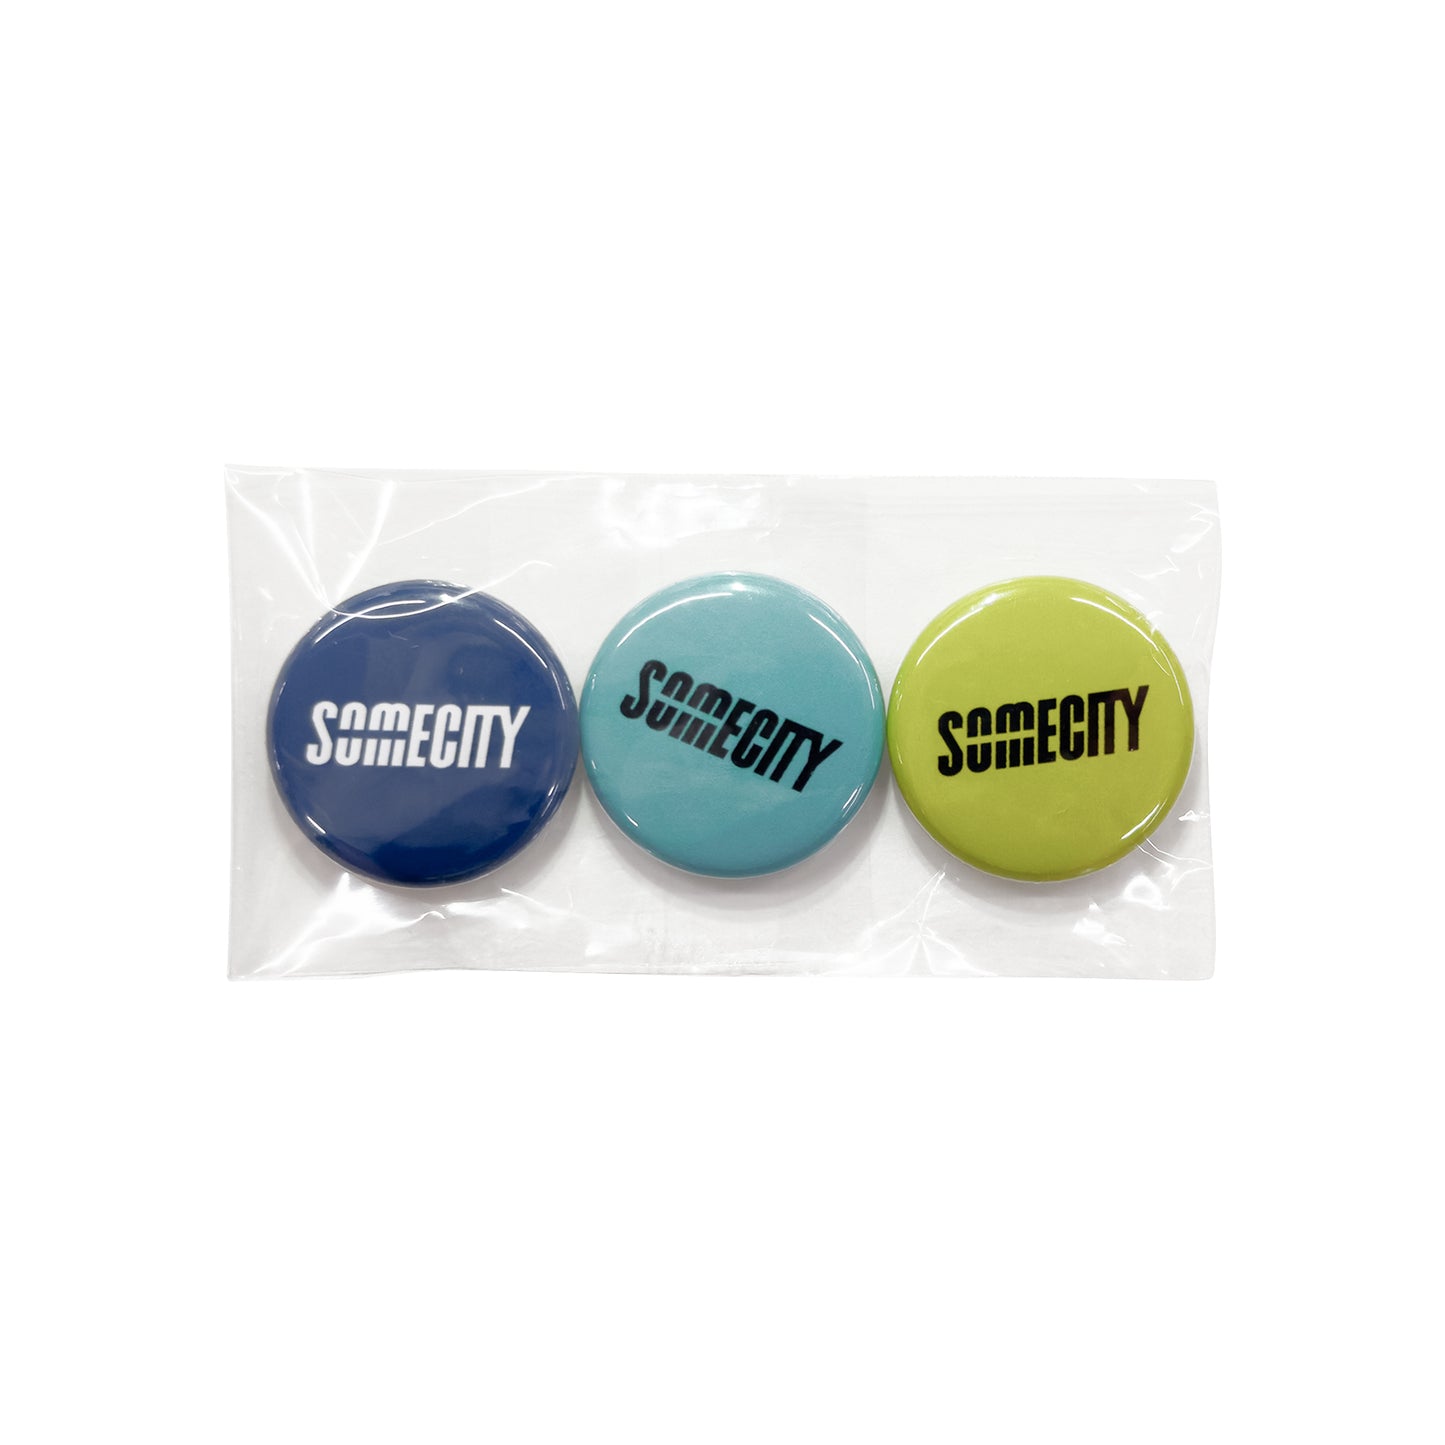 SOMECITY Button Badge 003